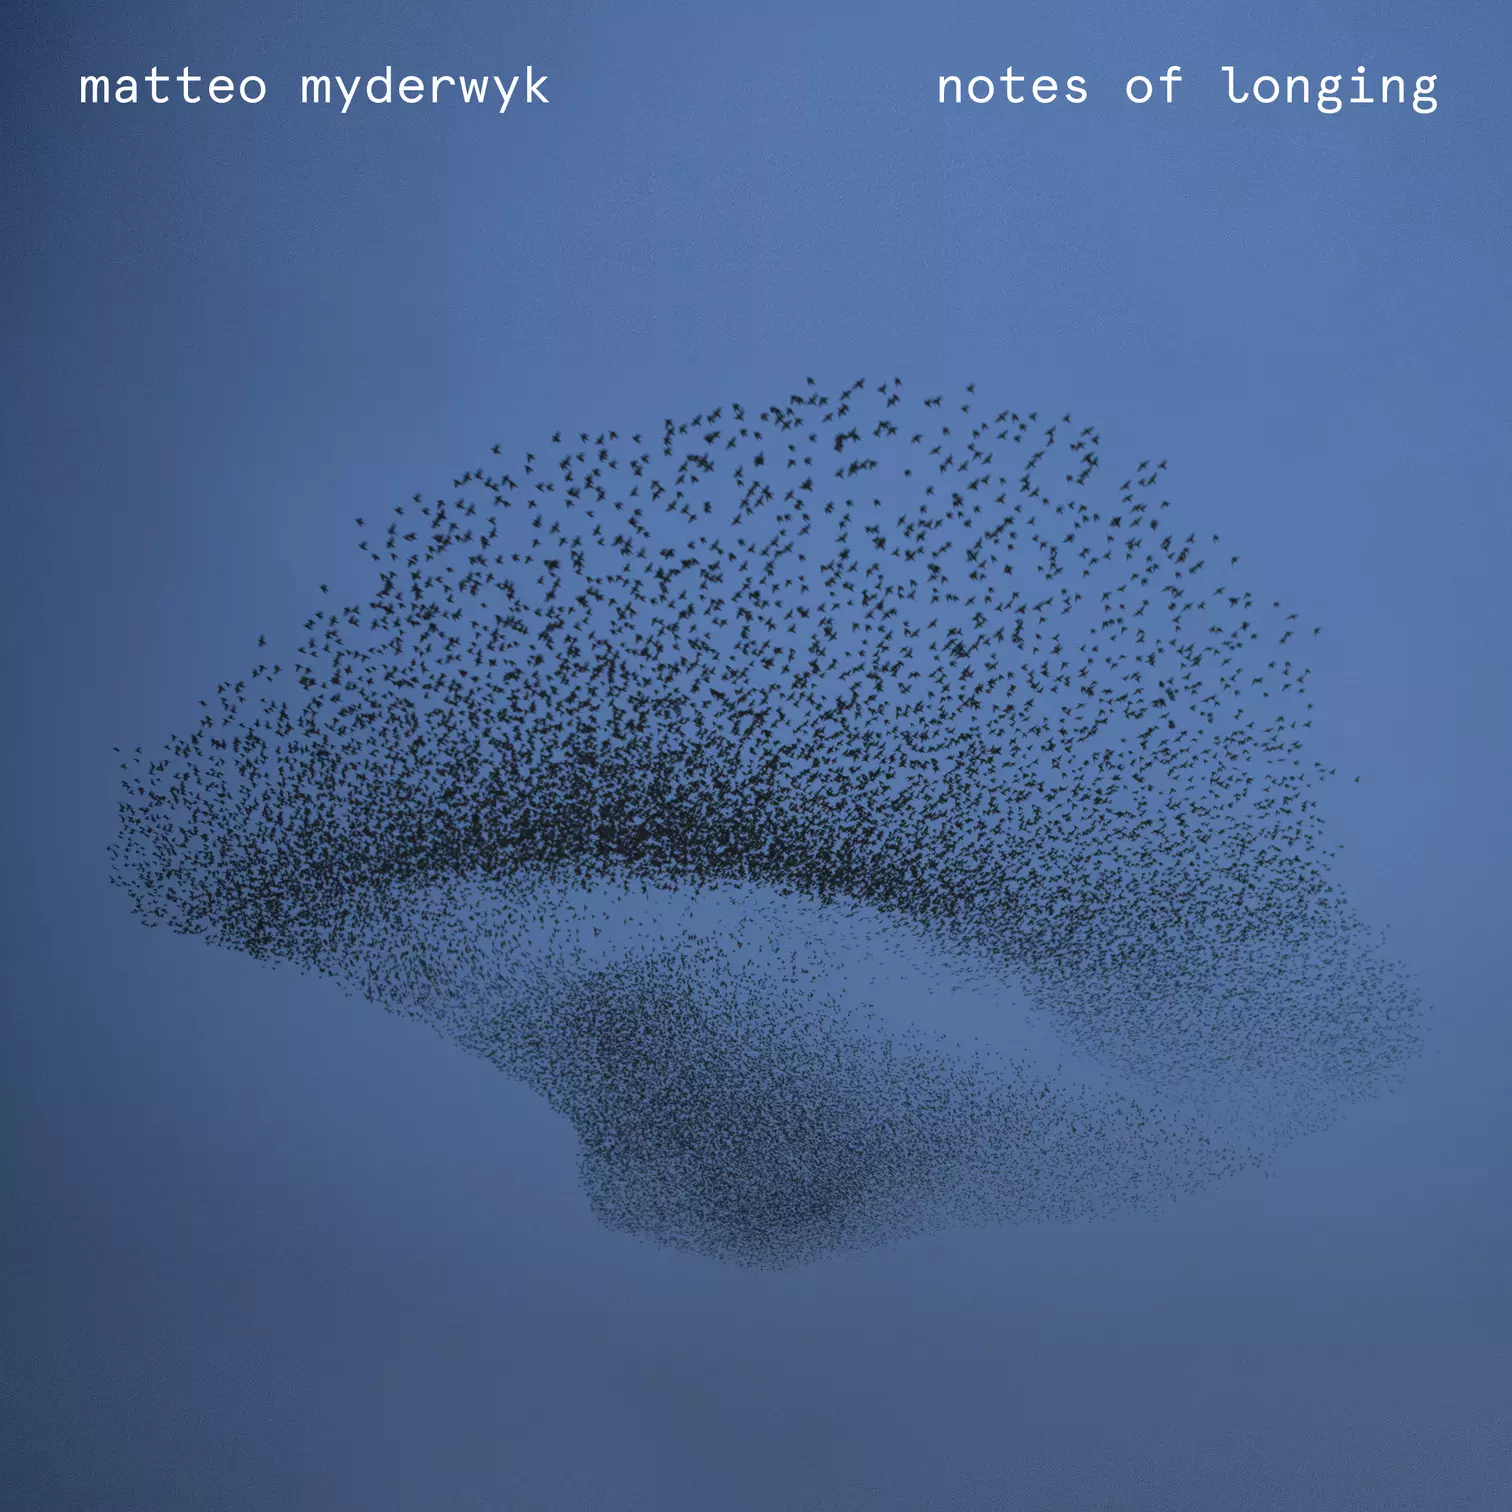 Notes of Longing Matteo Myderwyk